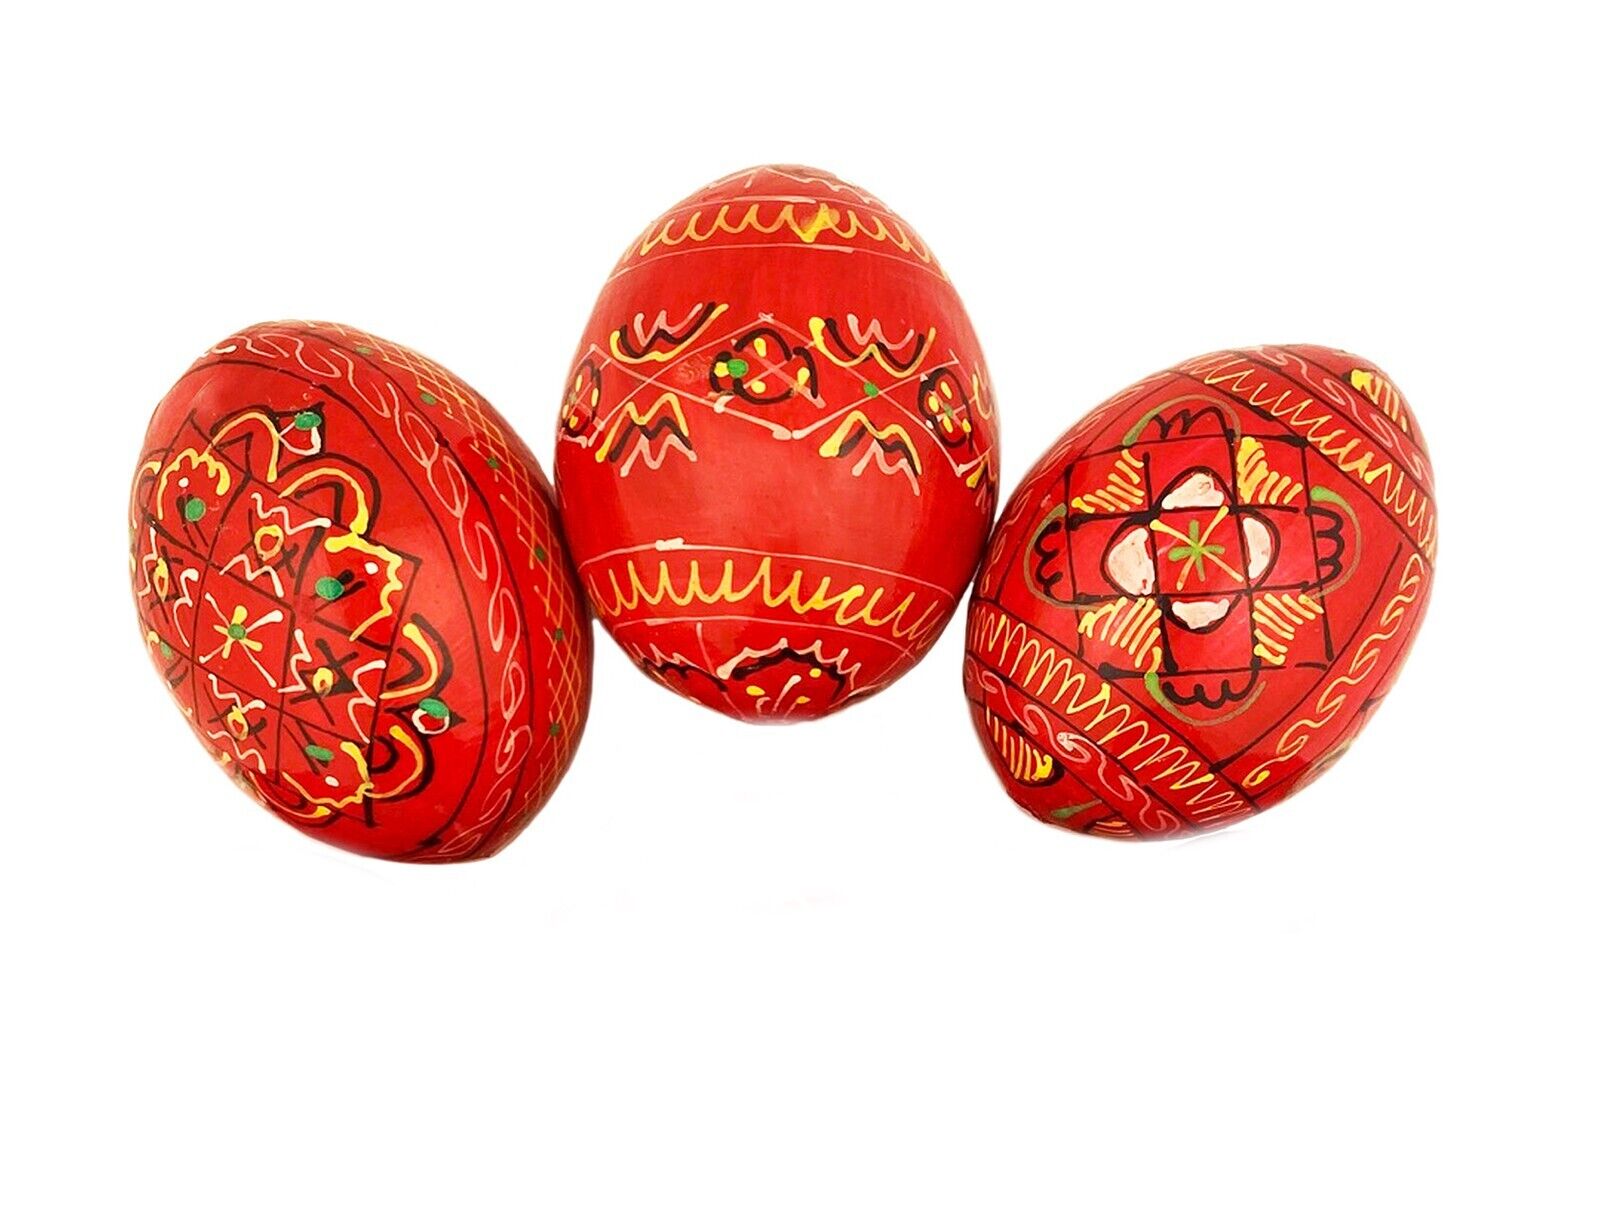 Pysanky Pisanki Hand Painted Ukrainian Wooden Easter Eggs - Pack of 3, Red  Eggs